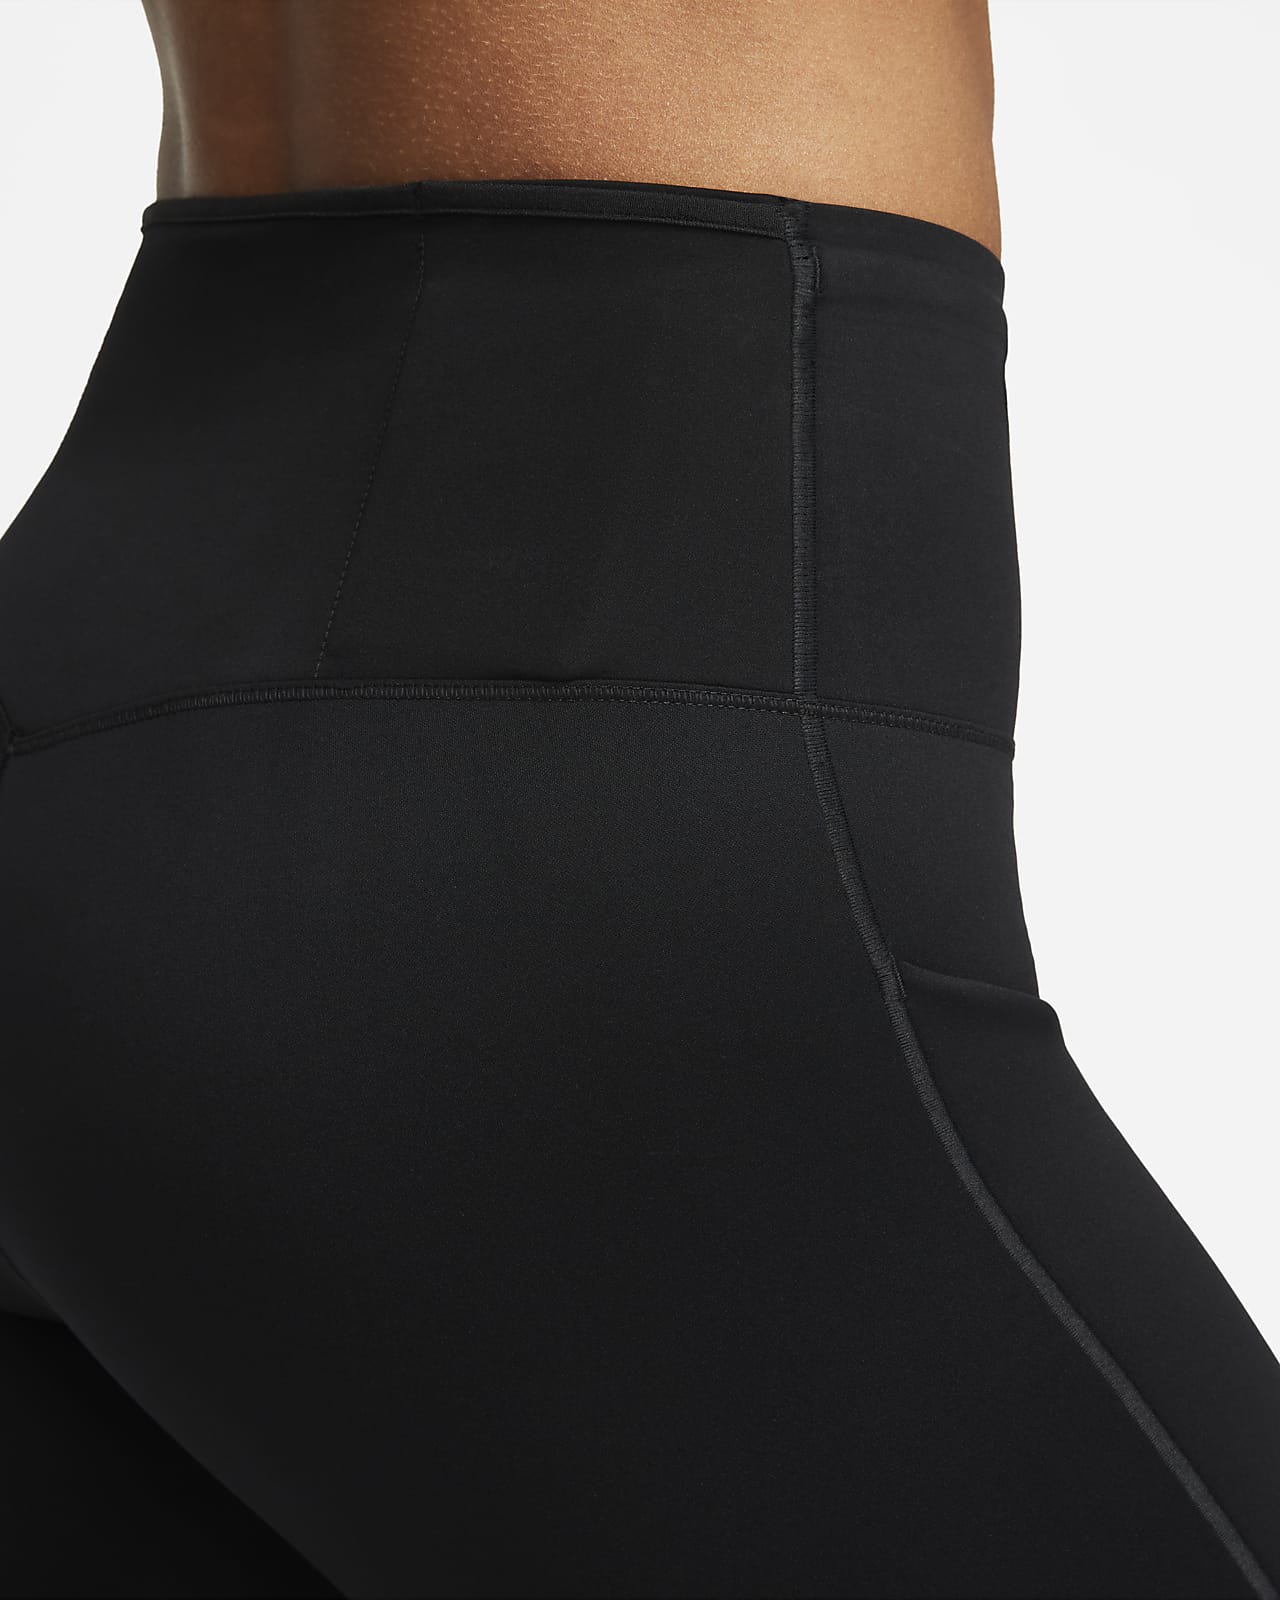 Biker Shorts with Pockets - CALLAS